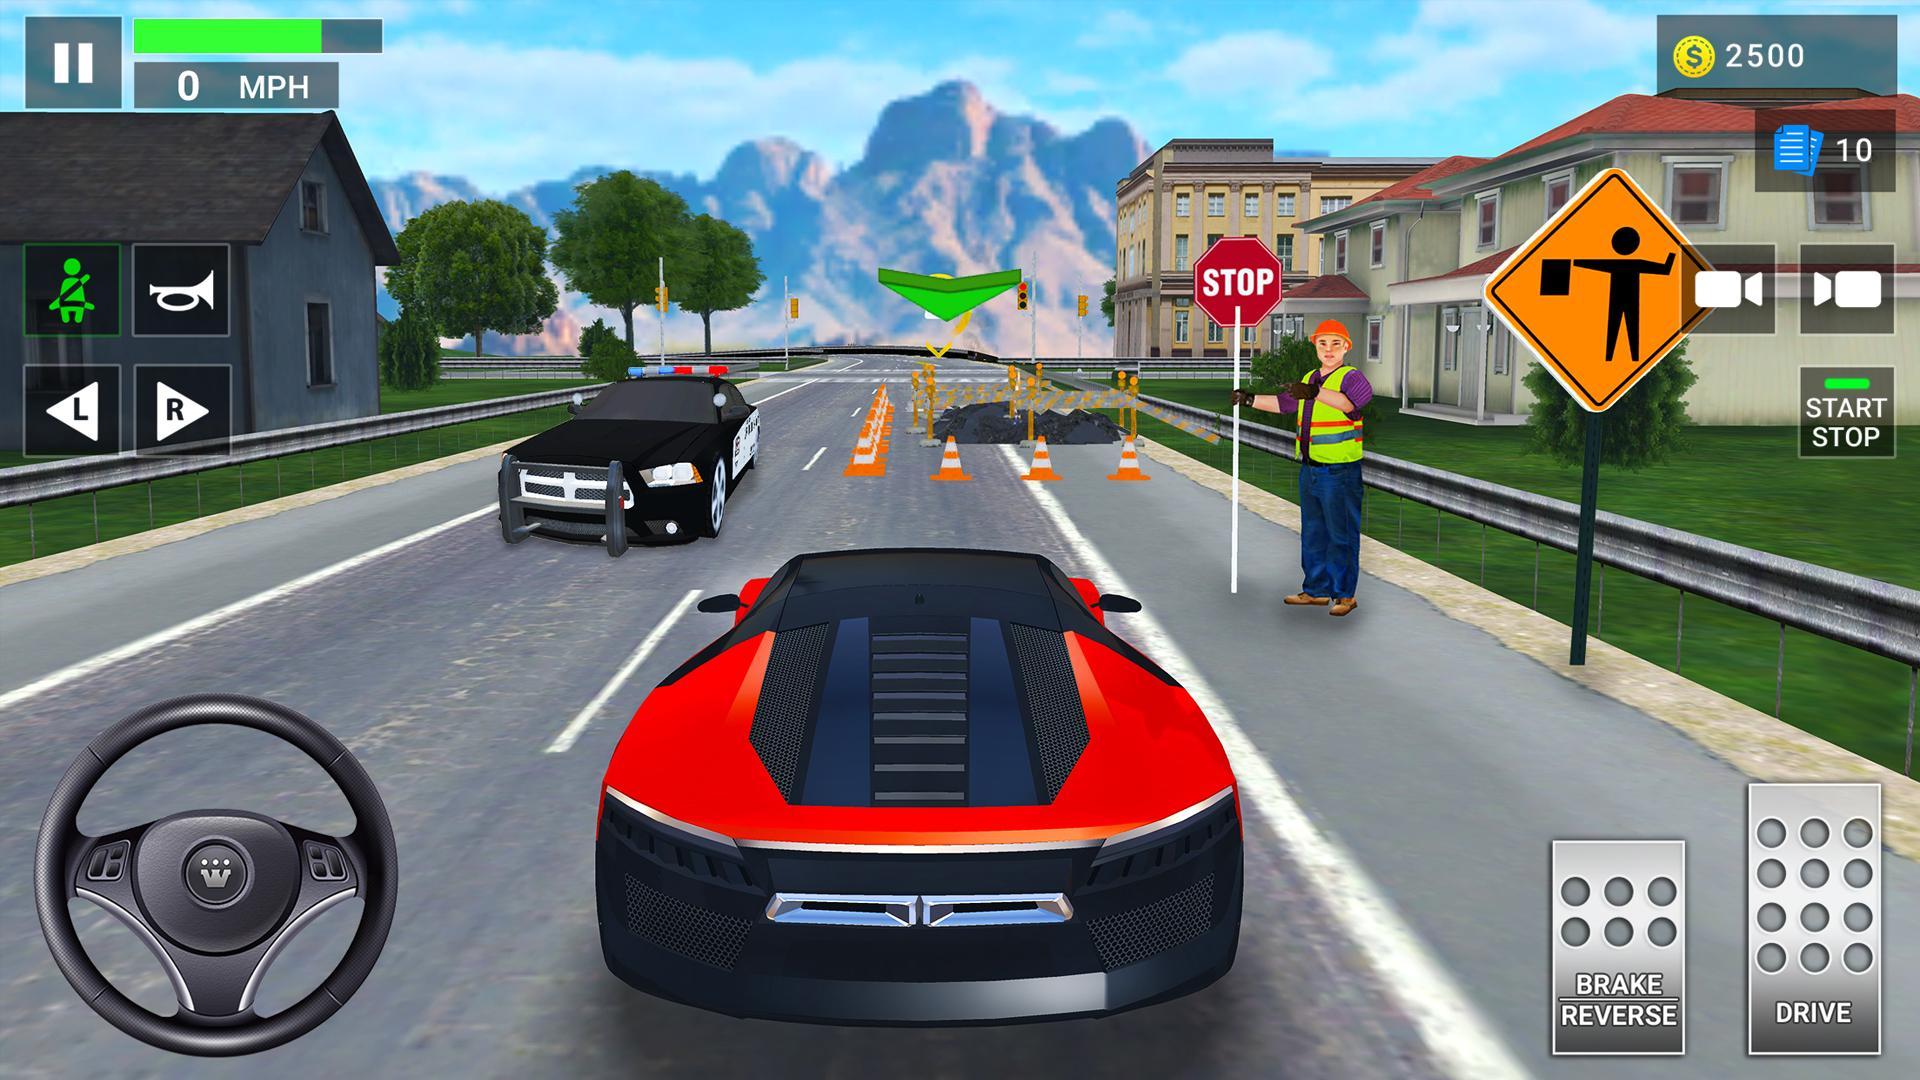 Driving Academy 2 Car Games & Driving School 2021 2.1 Screenshot 3